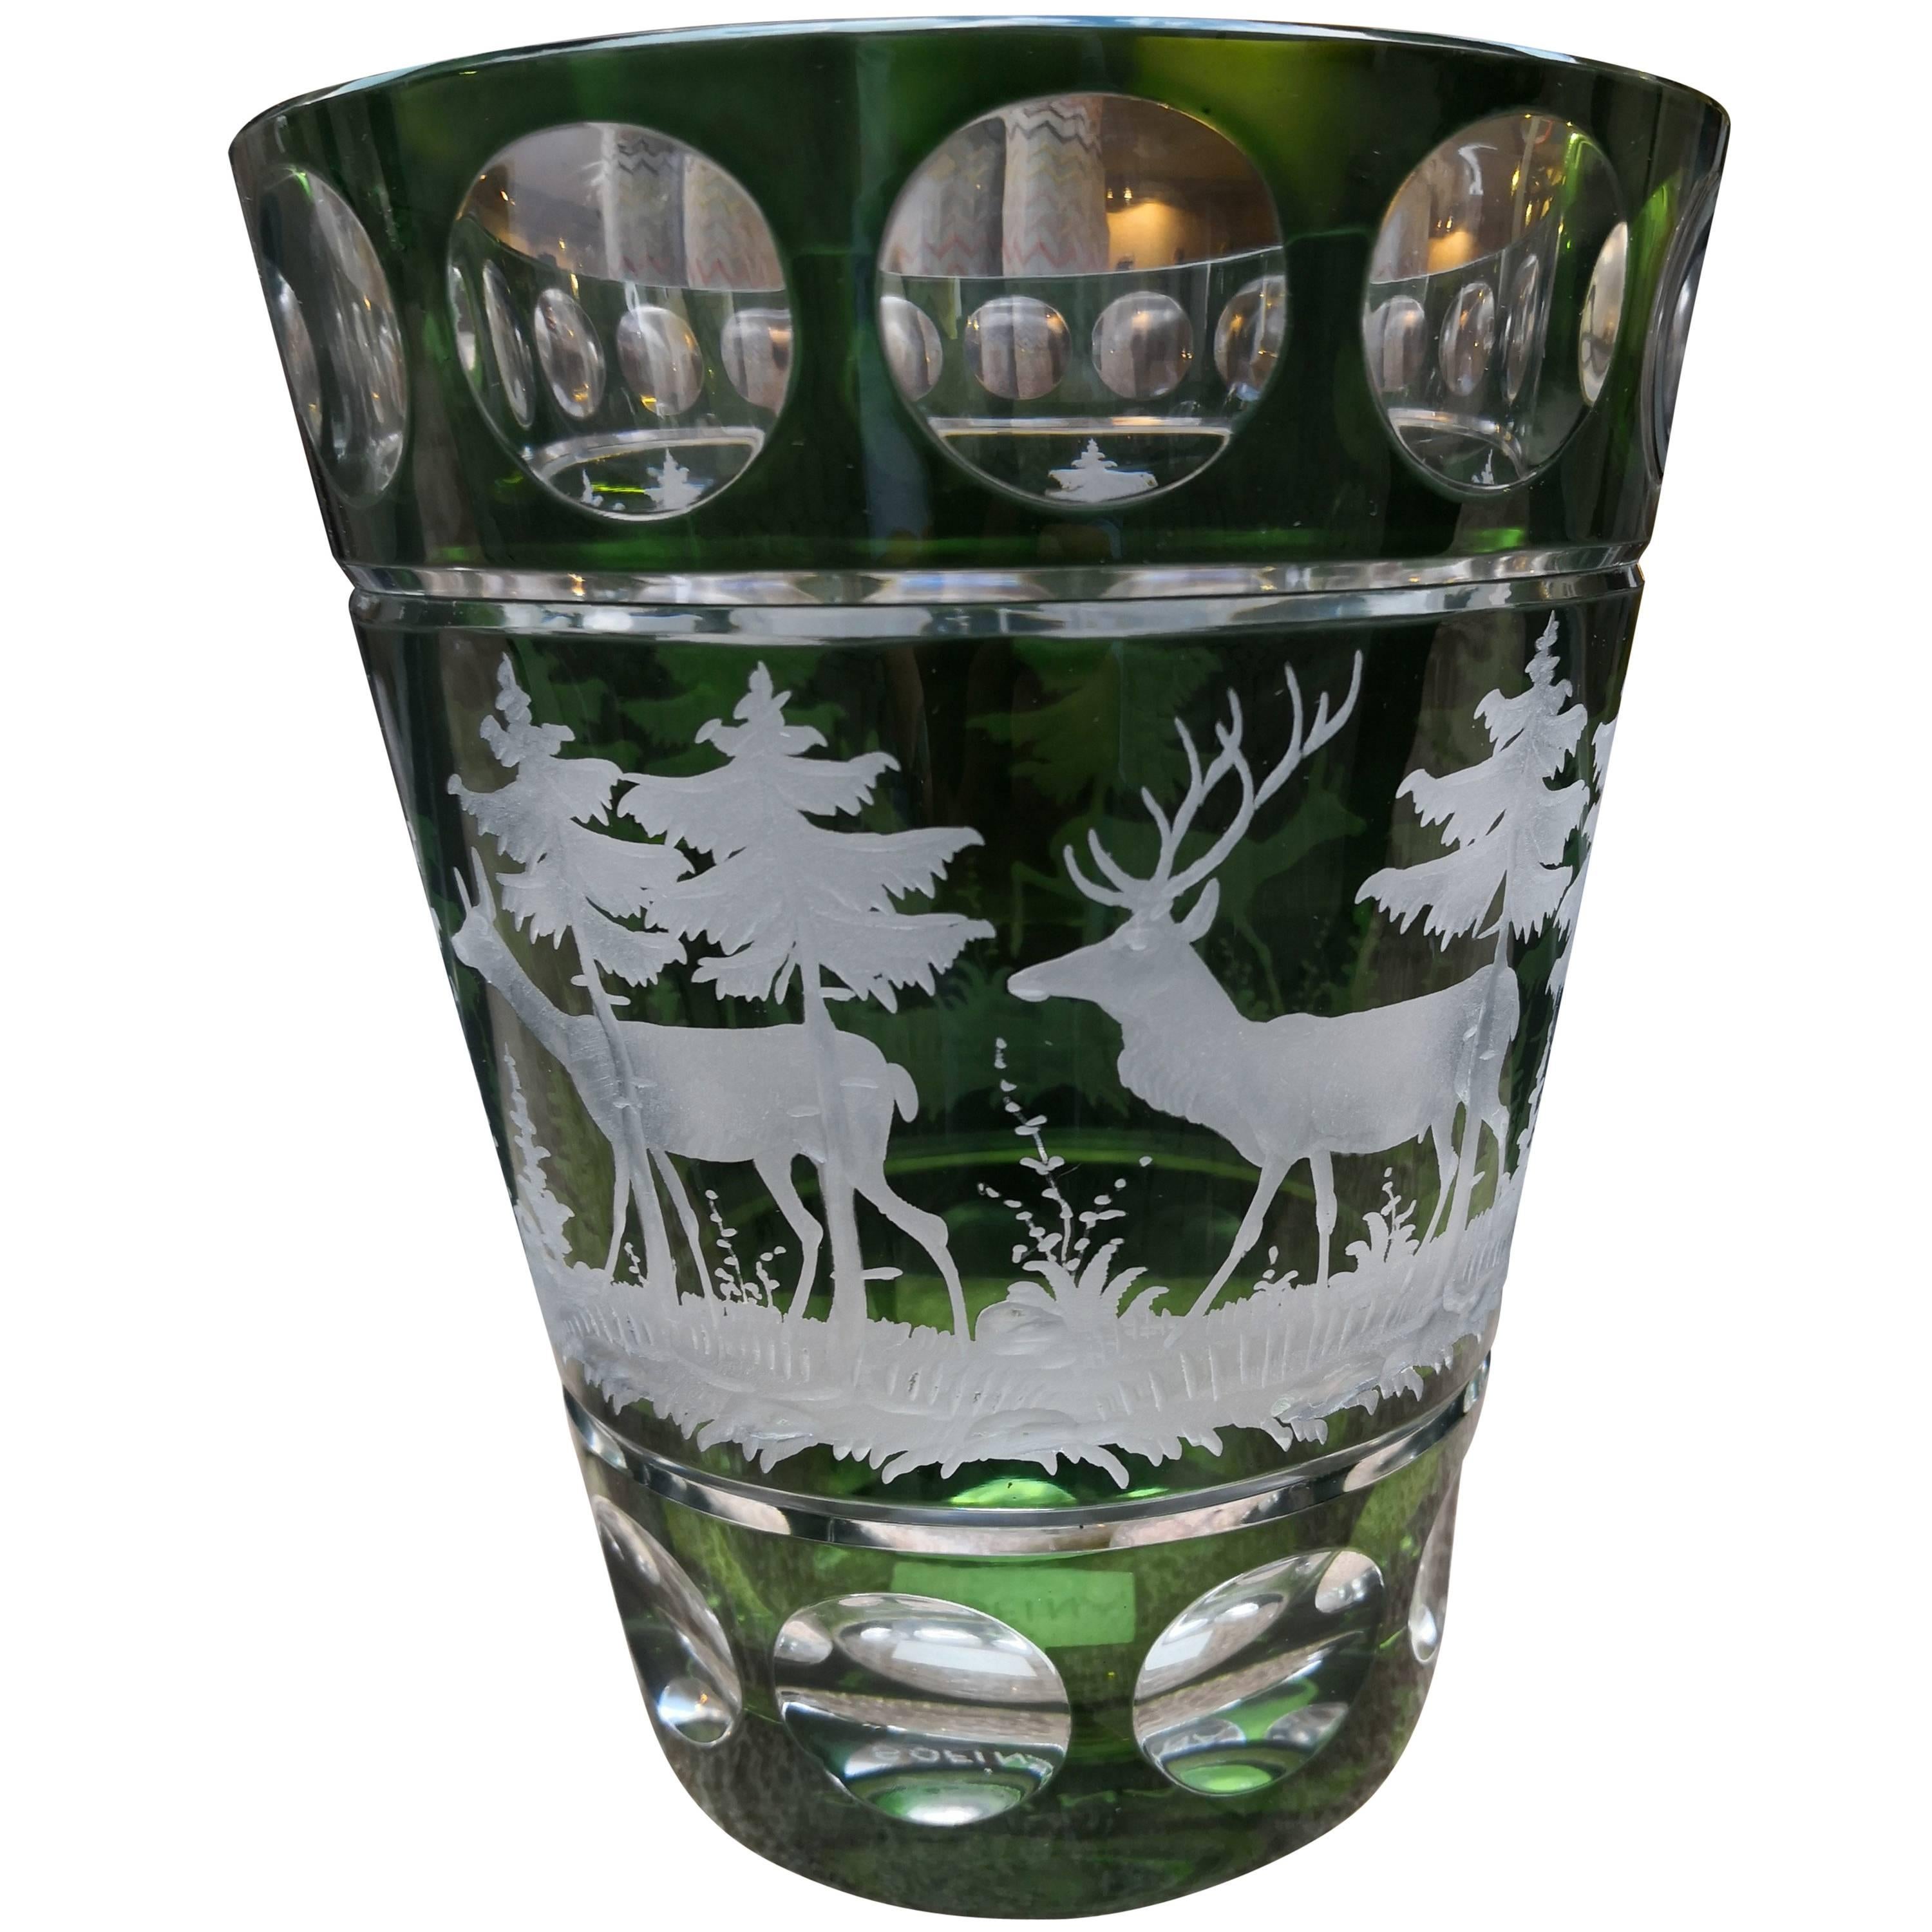 Black Forest Vase Green Crystal with Hunting Decor Sofina Boutique Kitzbuehel For Sale